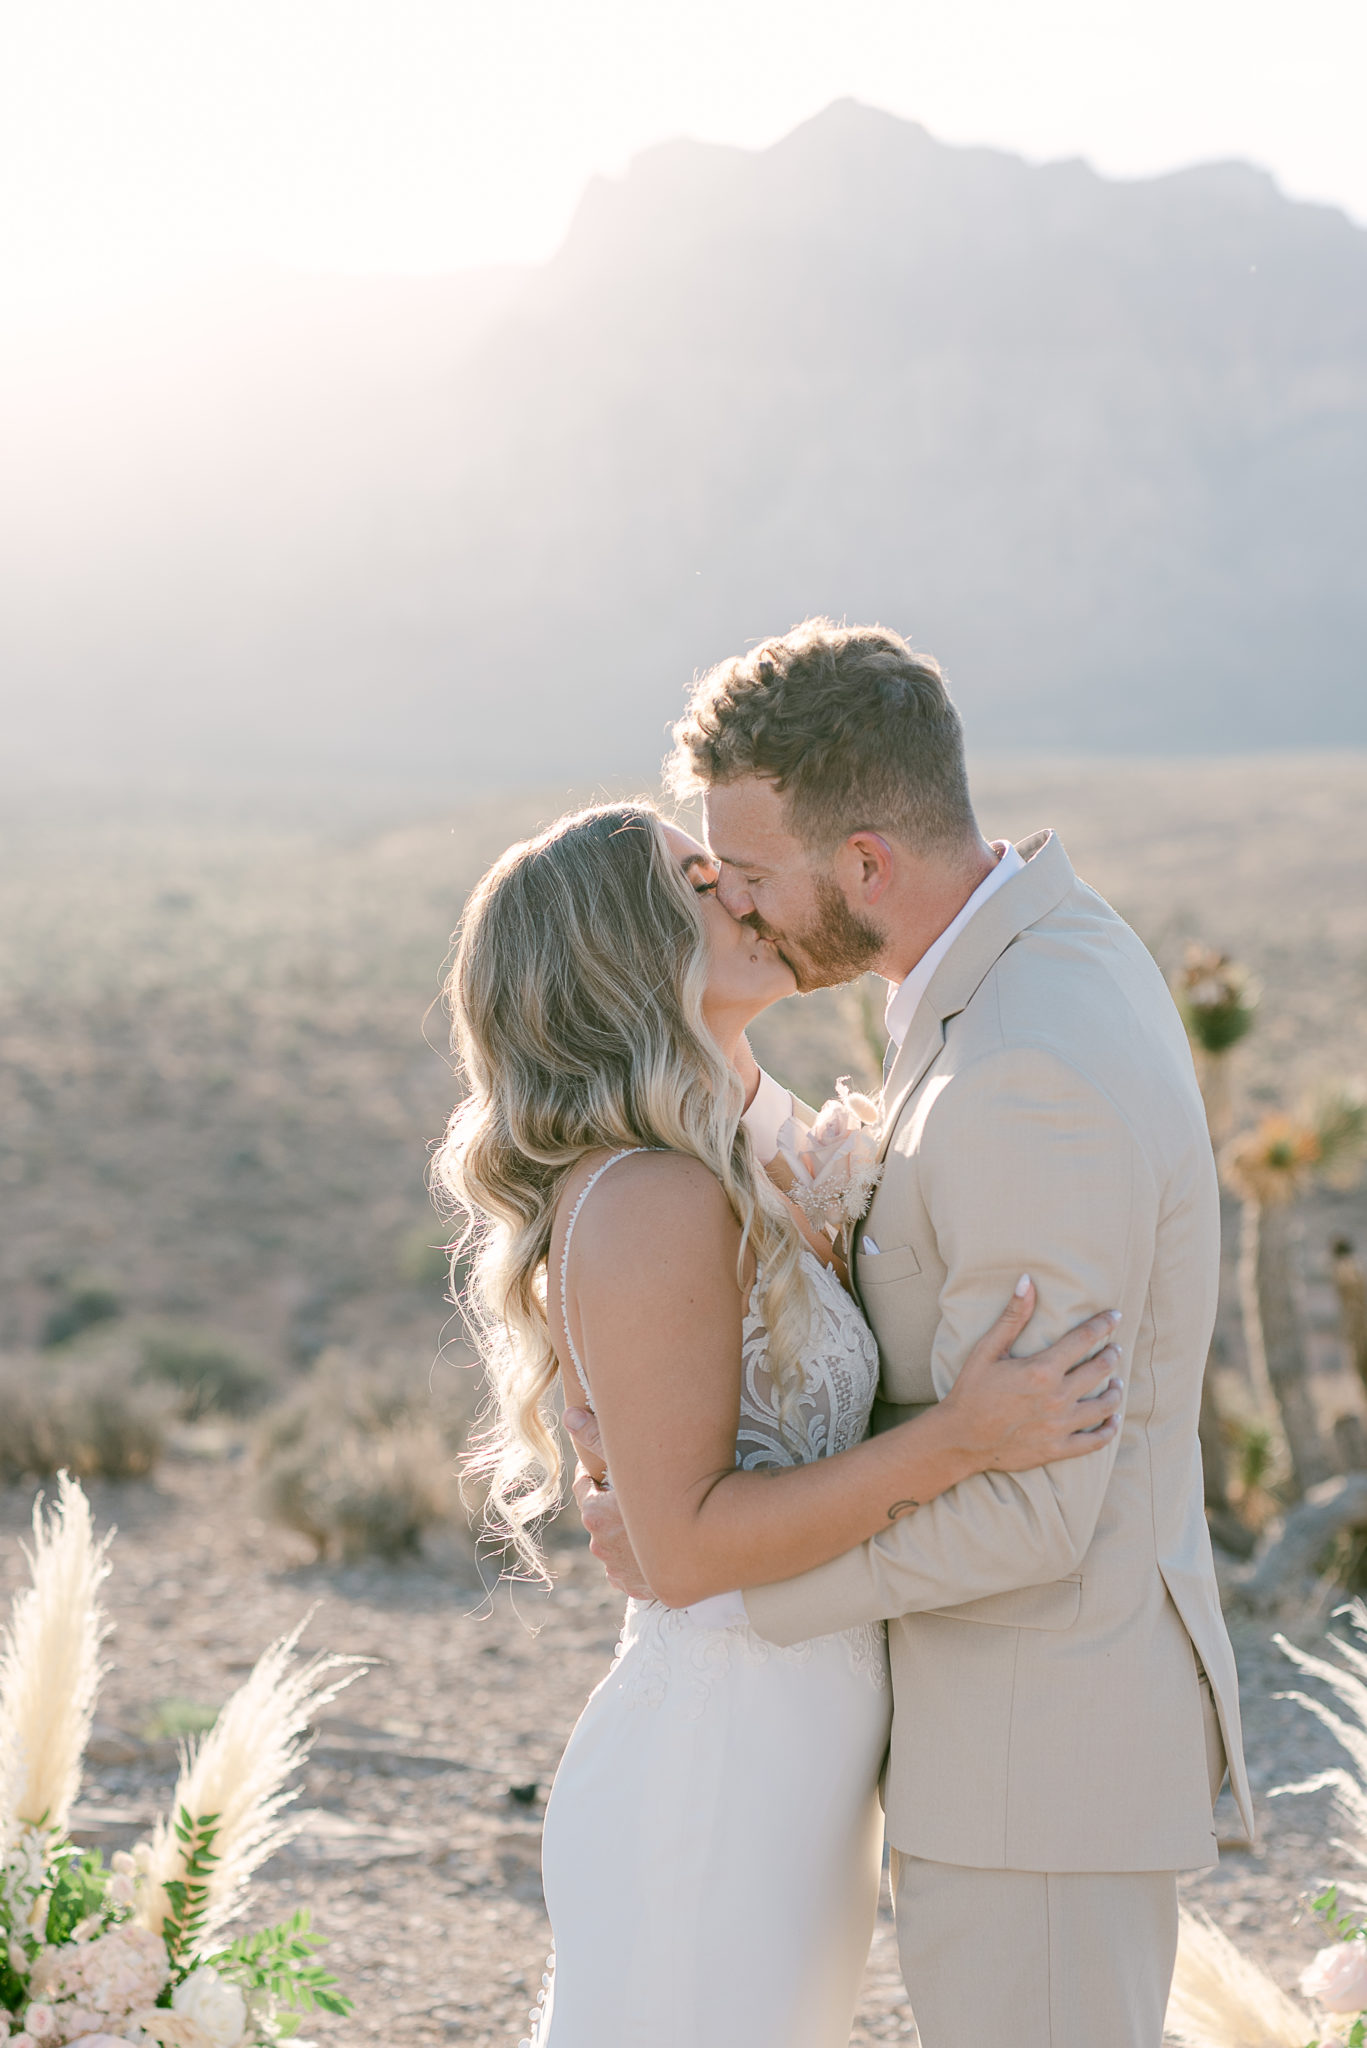 Las Vegas Photography Spots for Weddings